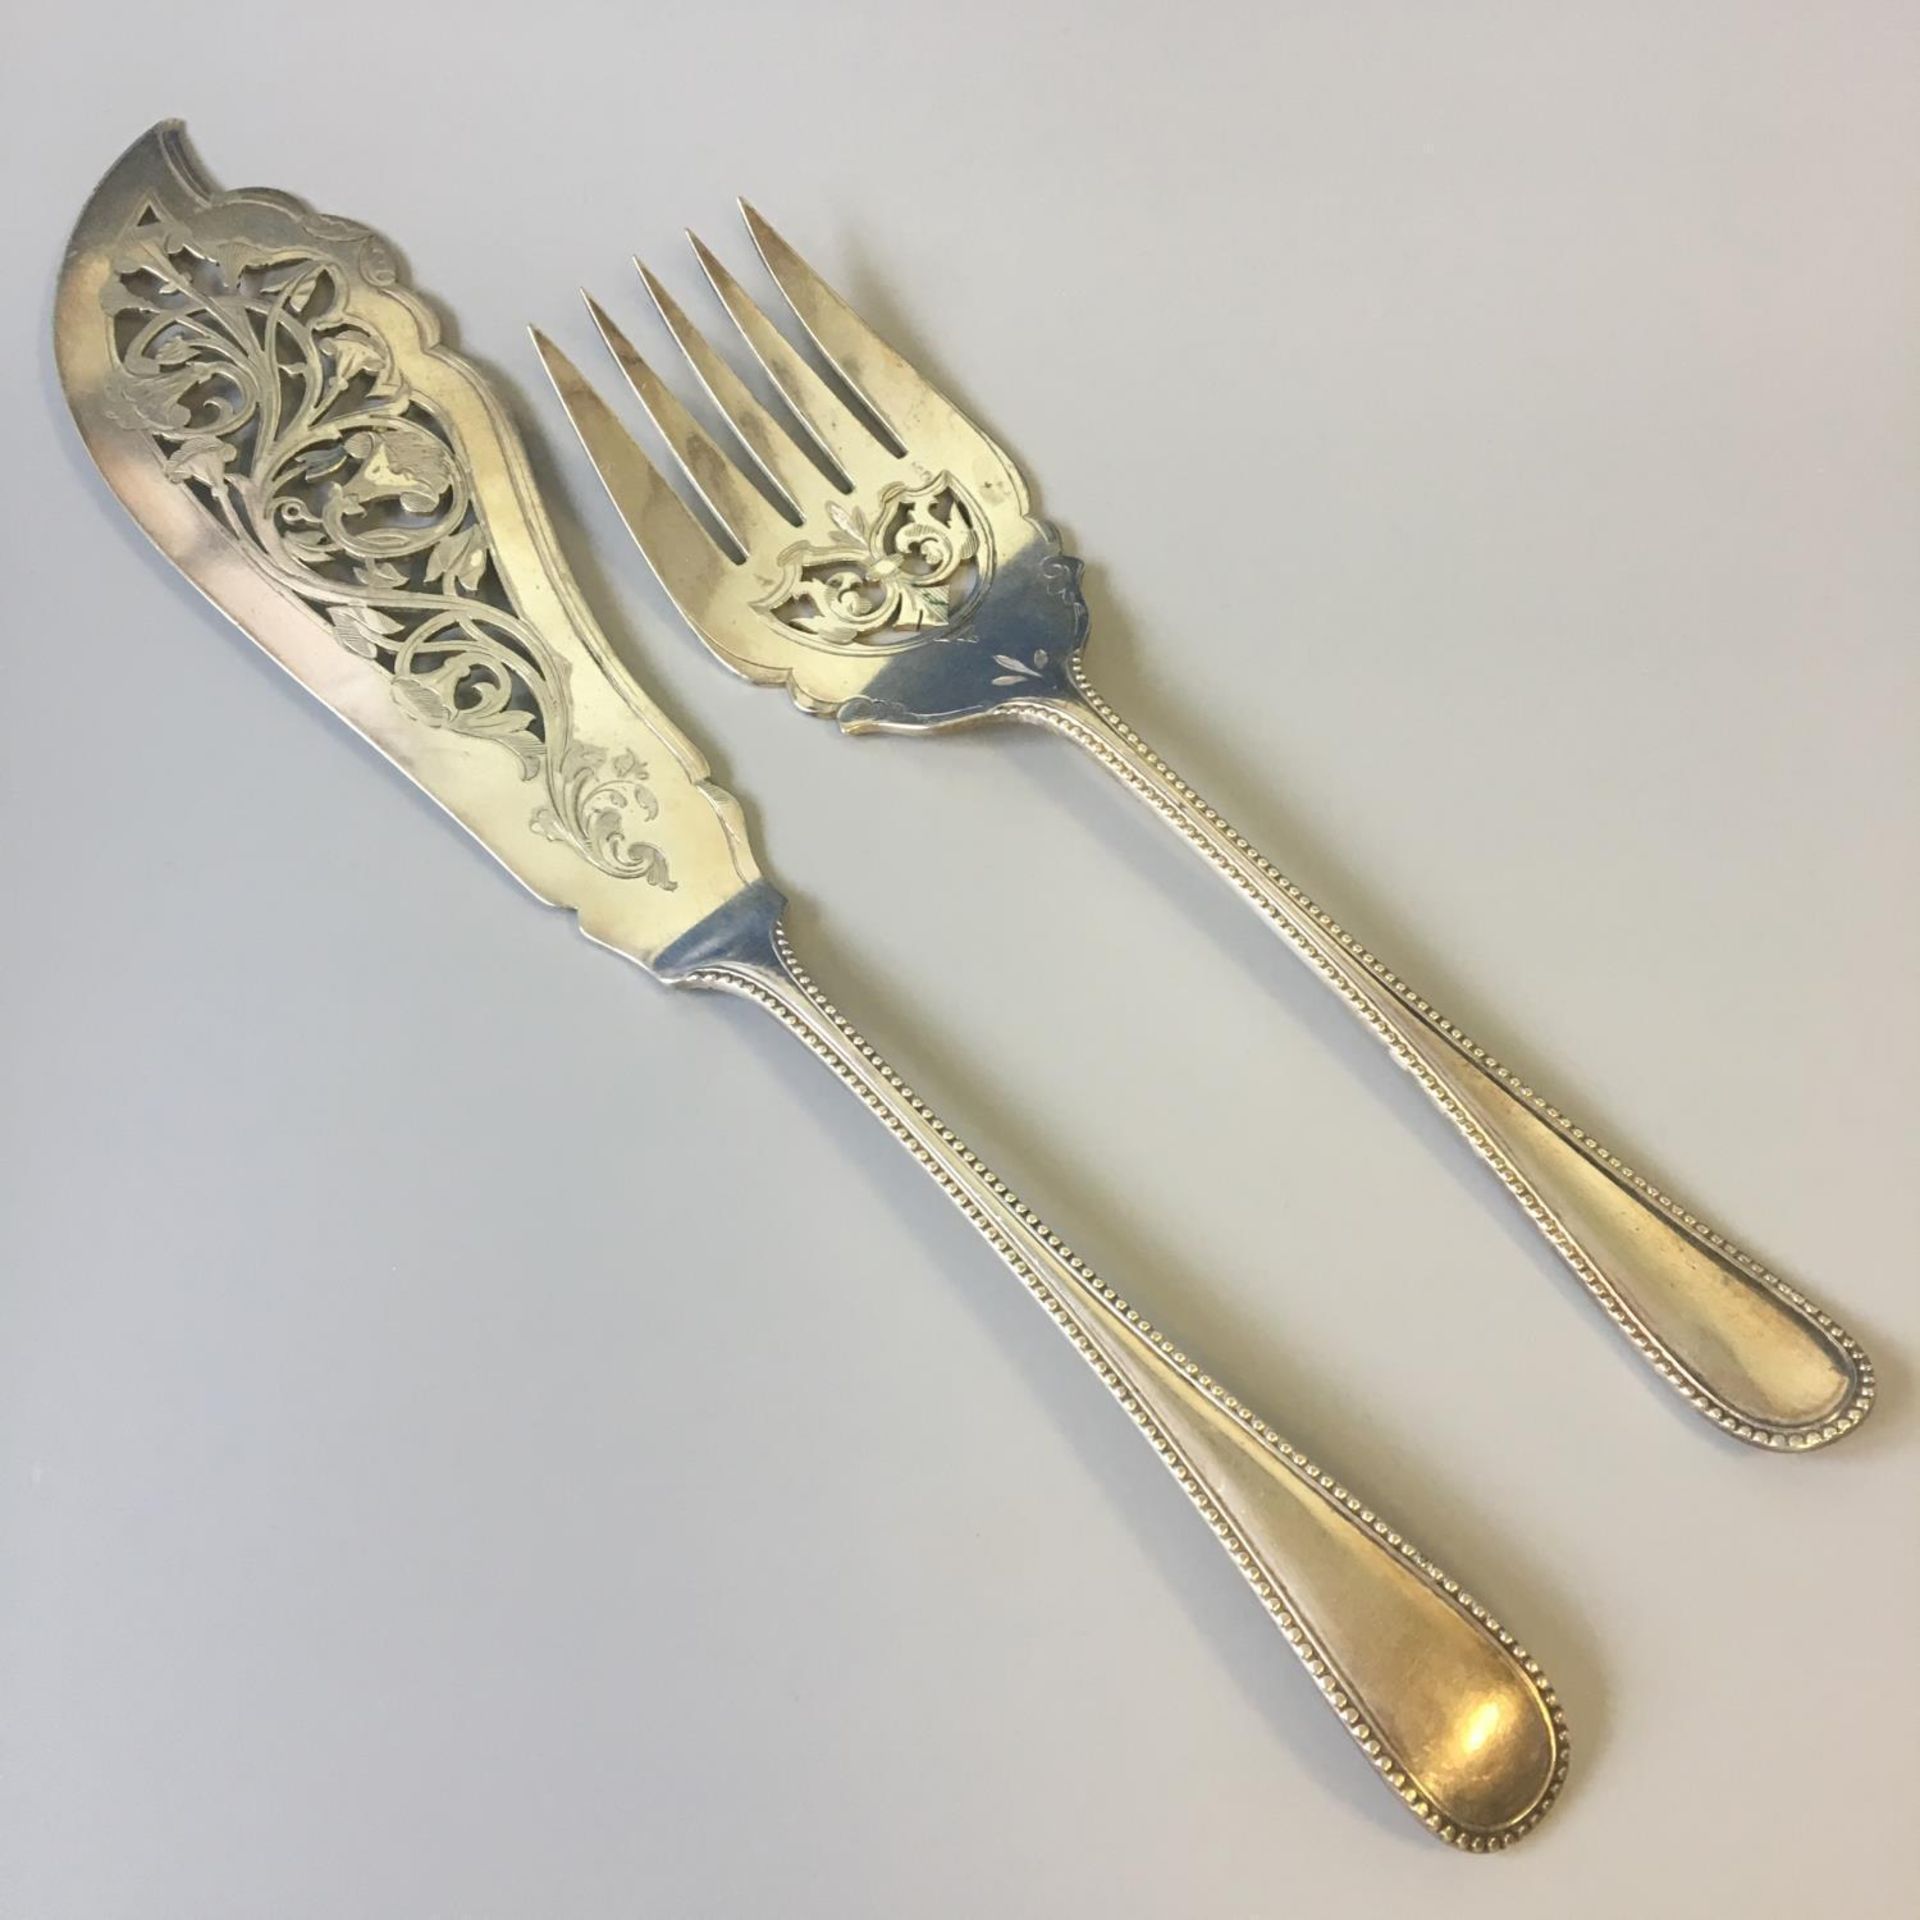 Superb Art Nouveau Silver Plate Serving Cutlery - Roberts & Belk Sheffield c1880 - Image 2 of 3